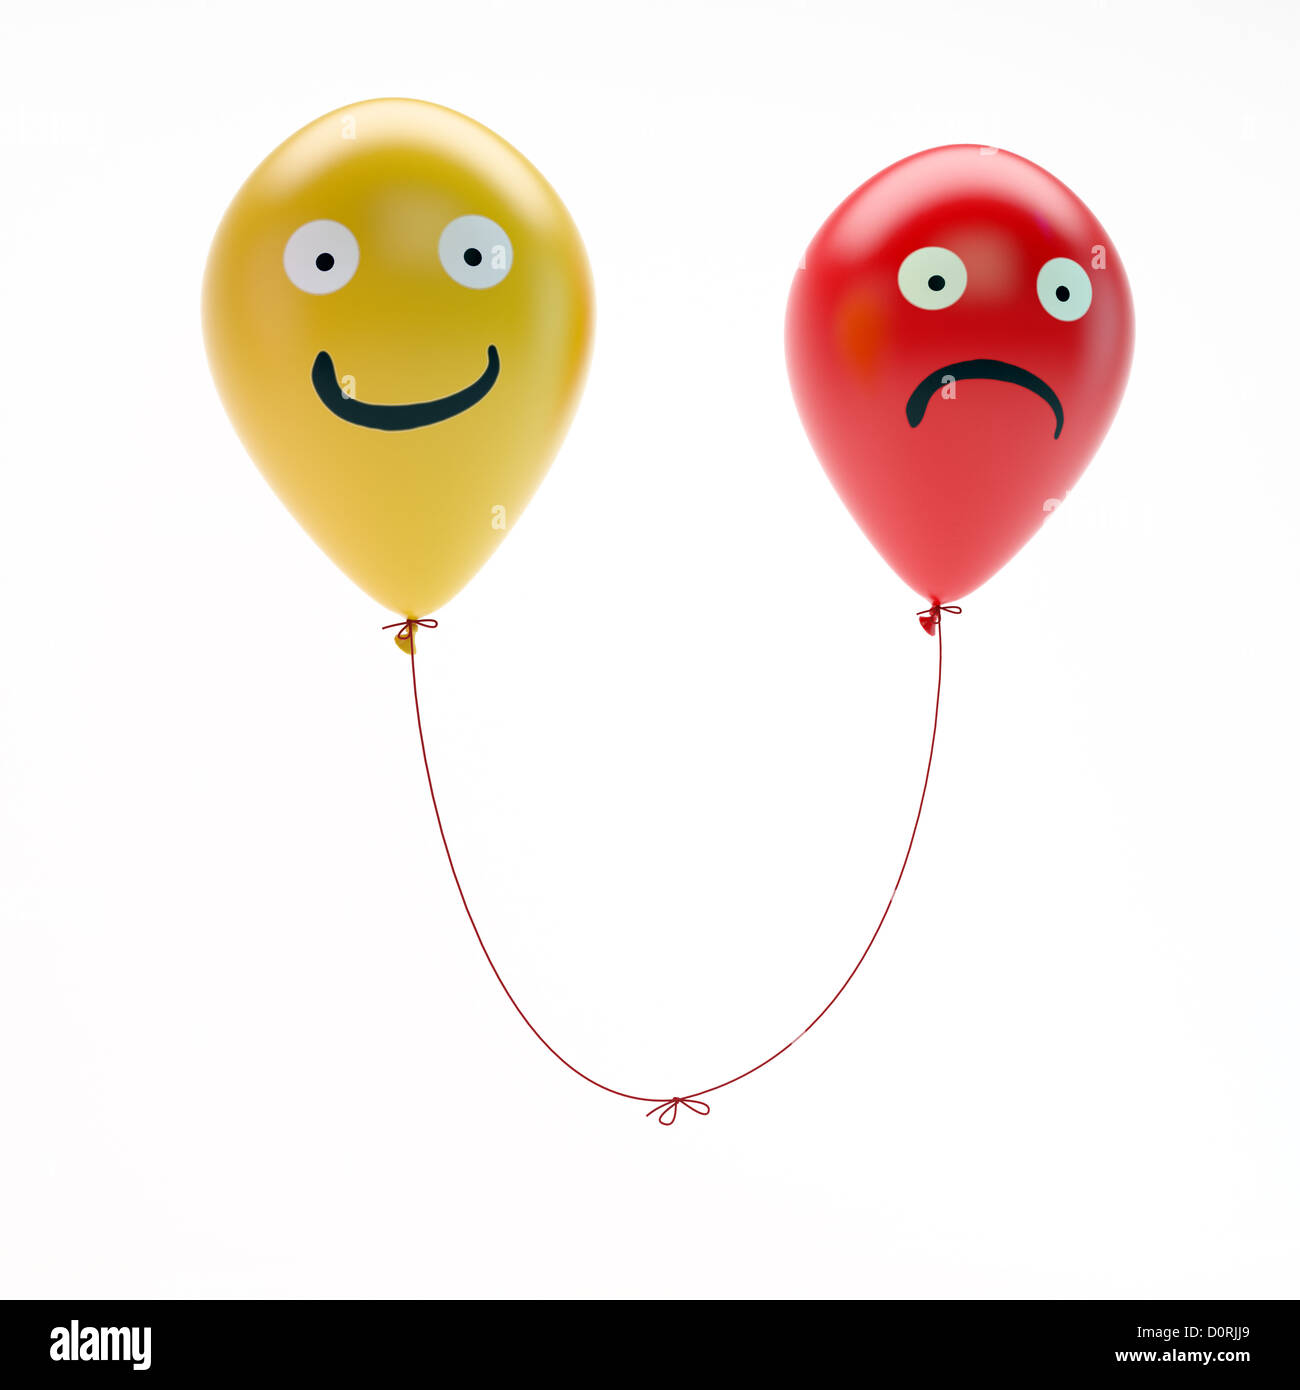 Sad and happy balloons Stock Photo